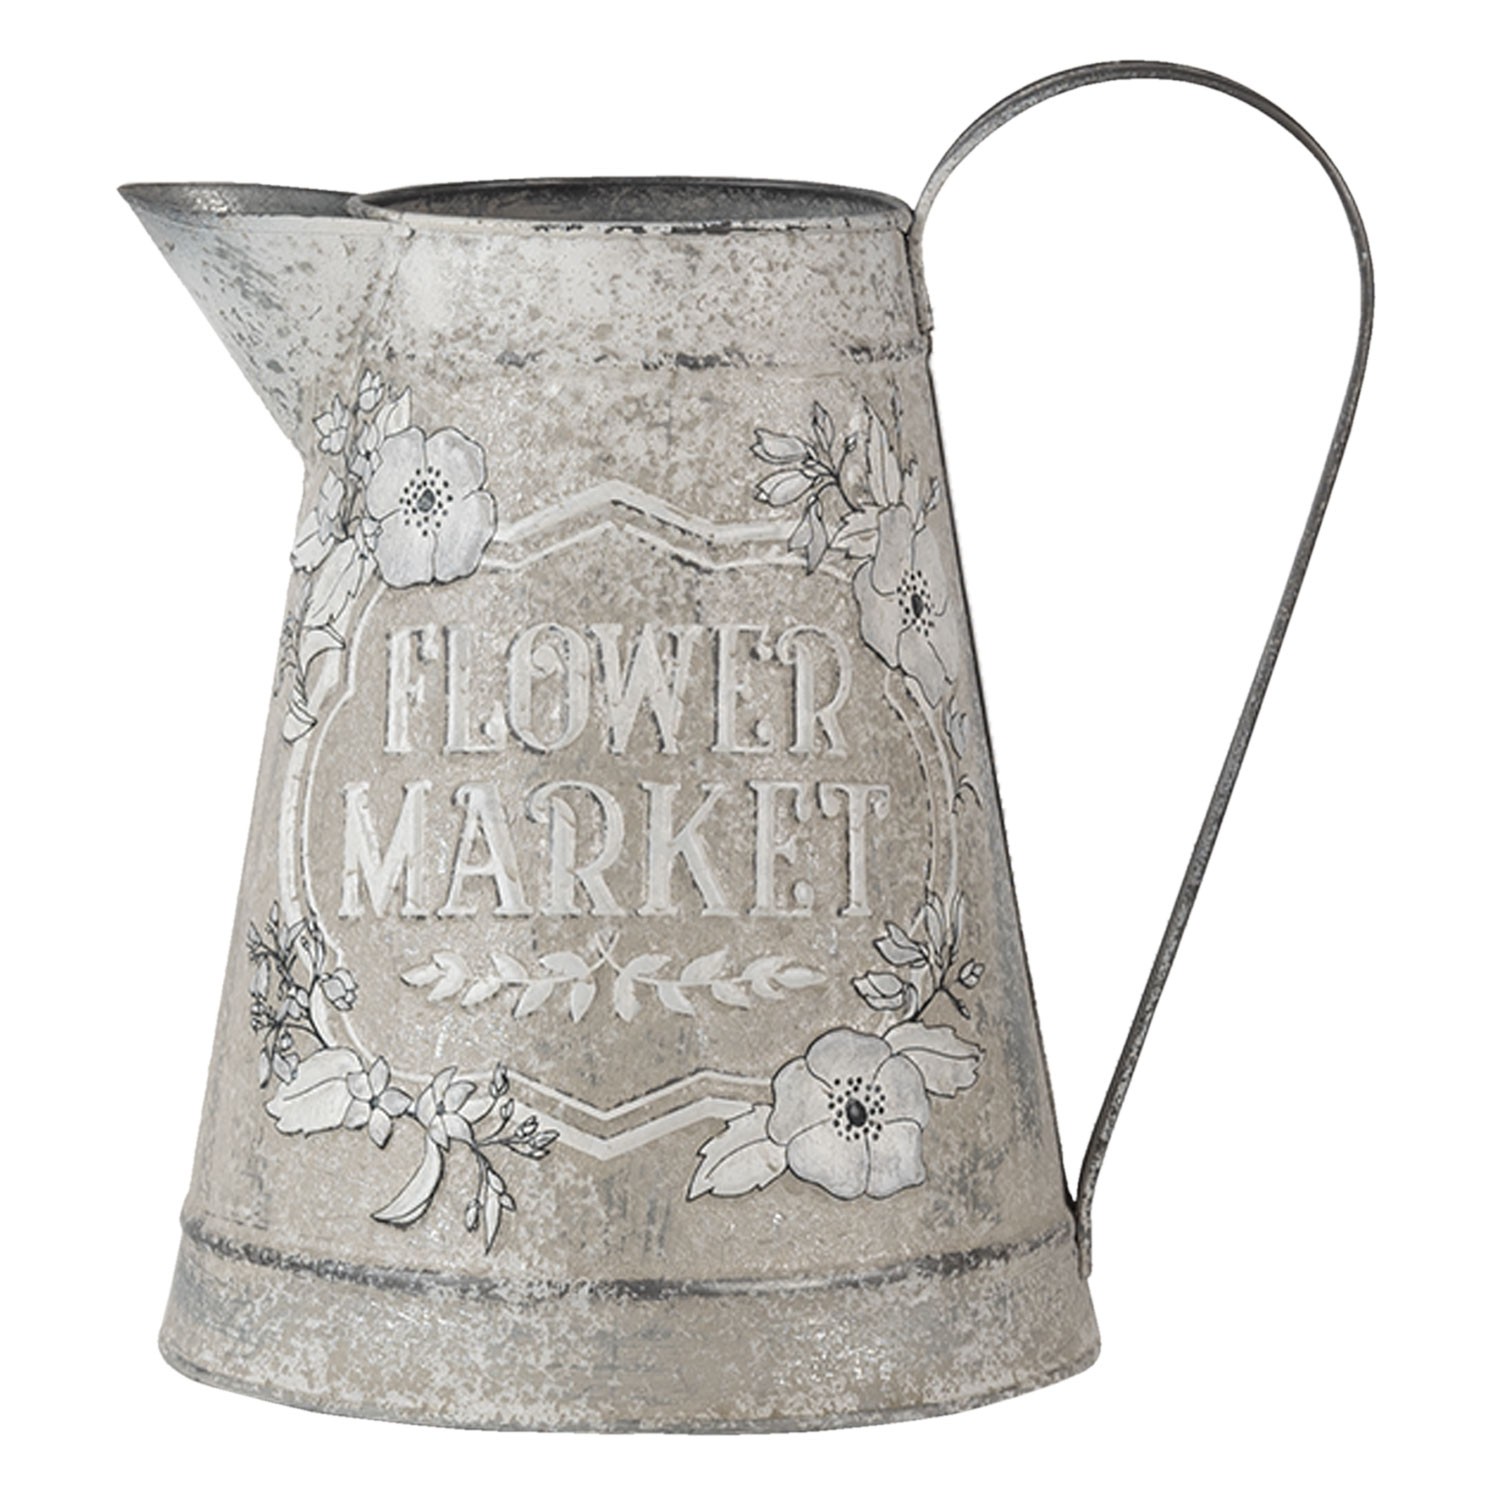 Dekorativní béžový džbán Flower market s patinou - 17*17*23 cm Clayre & Eef